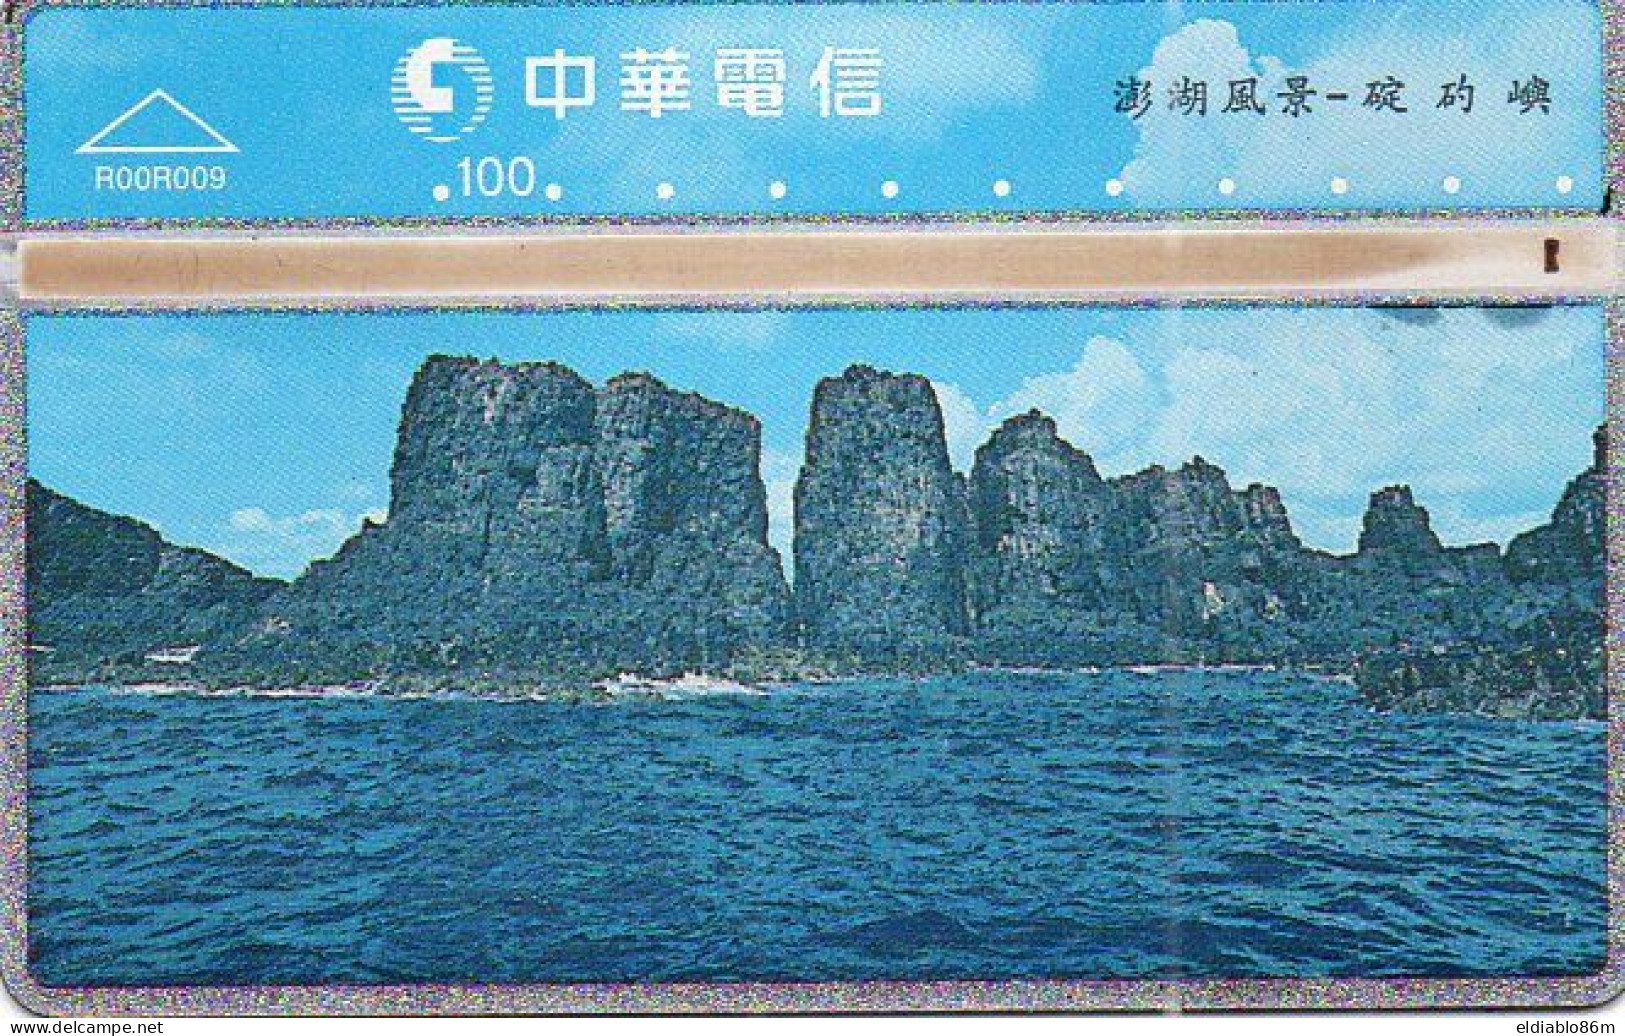 TAIWAN - L&G - CHUNGWA - R00R009 - VIEW OF PEUN HOO - 014E - Taiwan (Formosa)